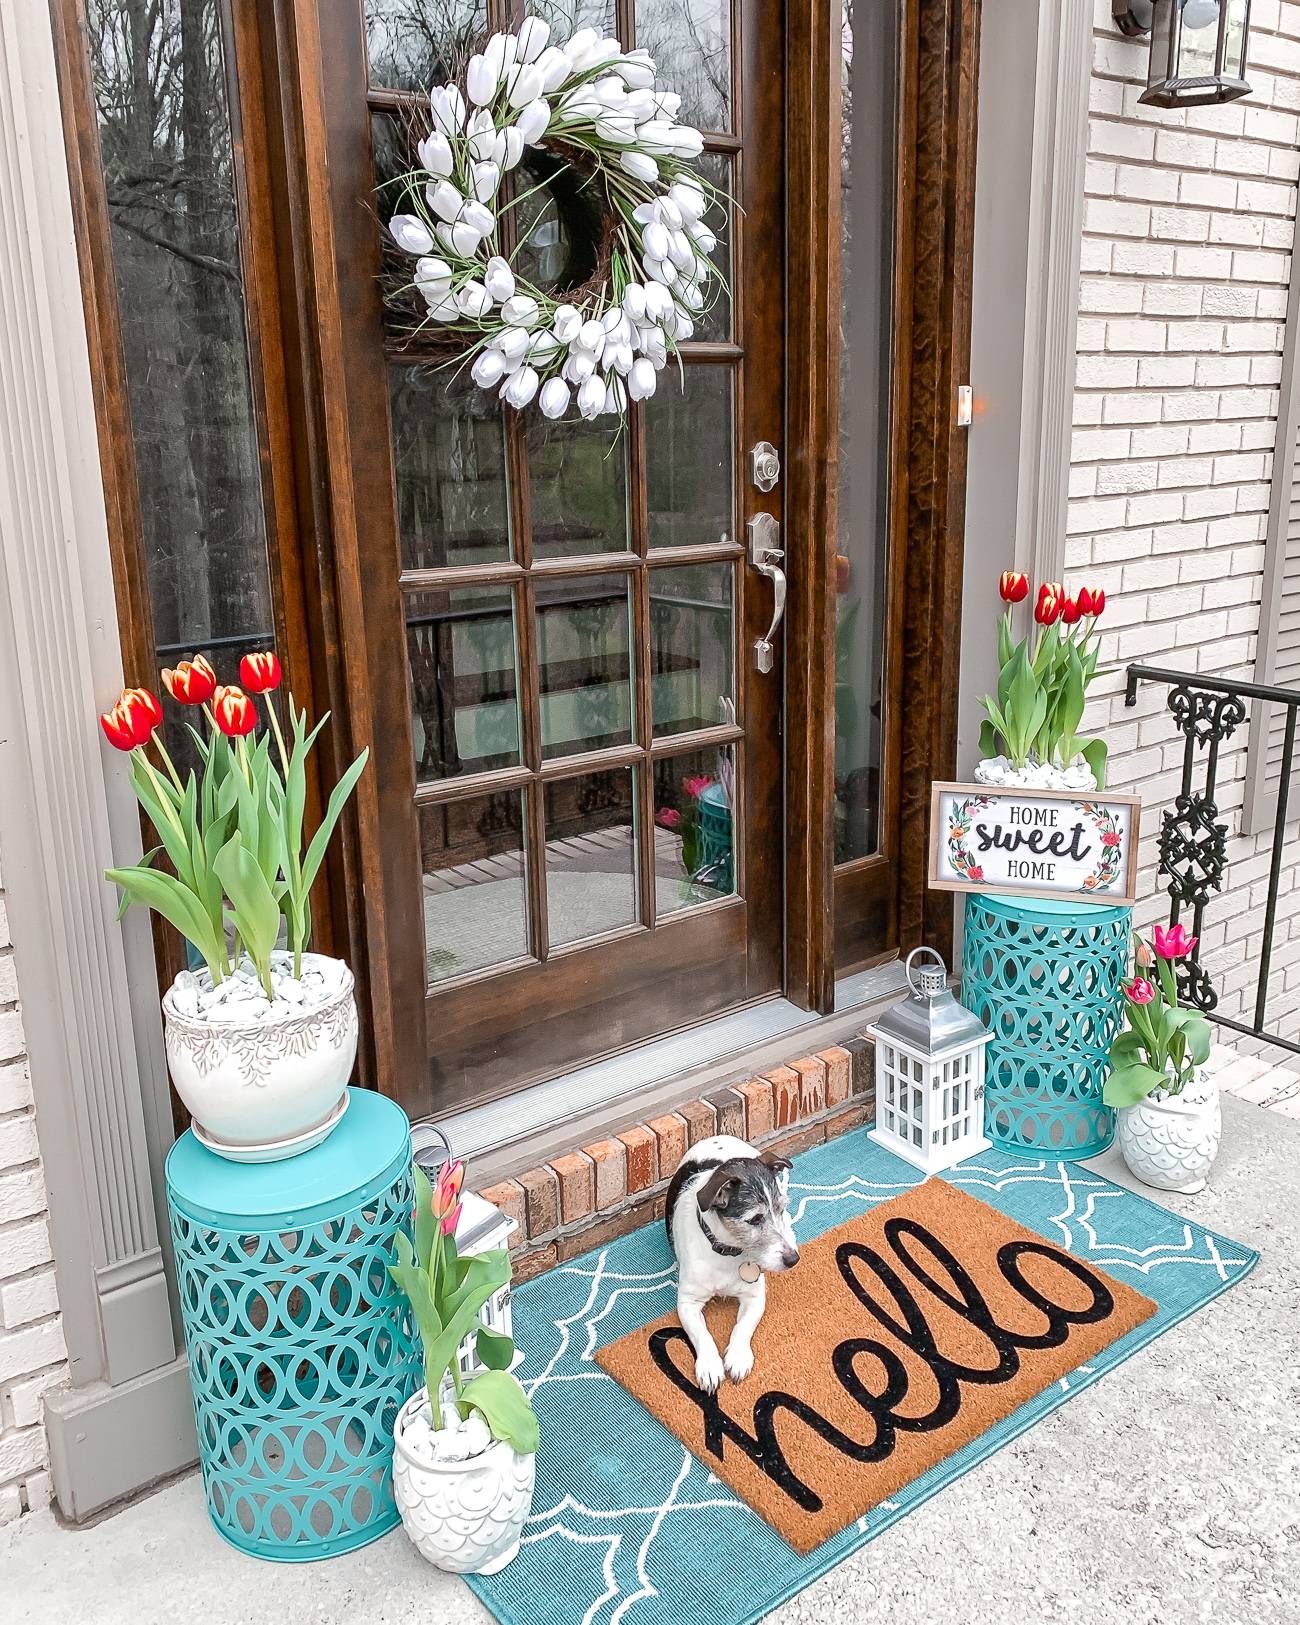 Spring-summer-front-porch-idea-Front-door-wreath-Home-decor-Home-depot-laura-beverlin-12-82841